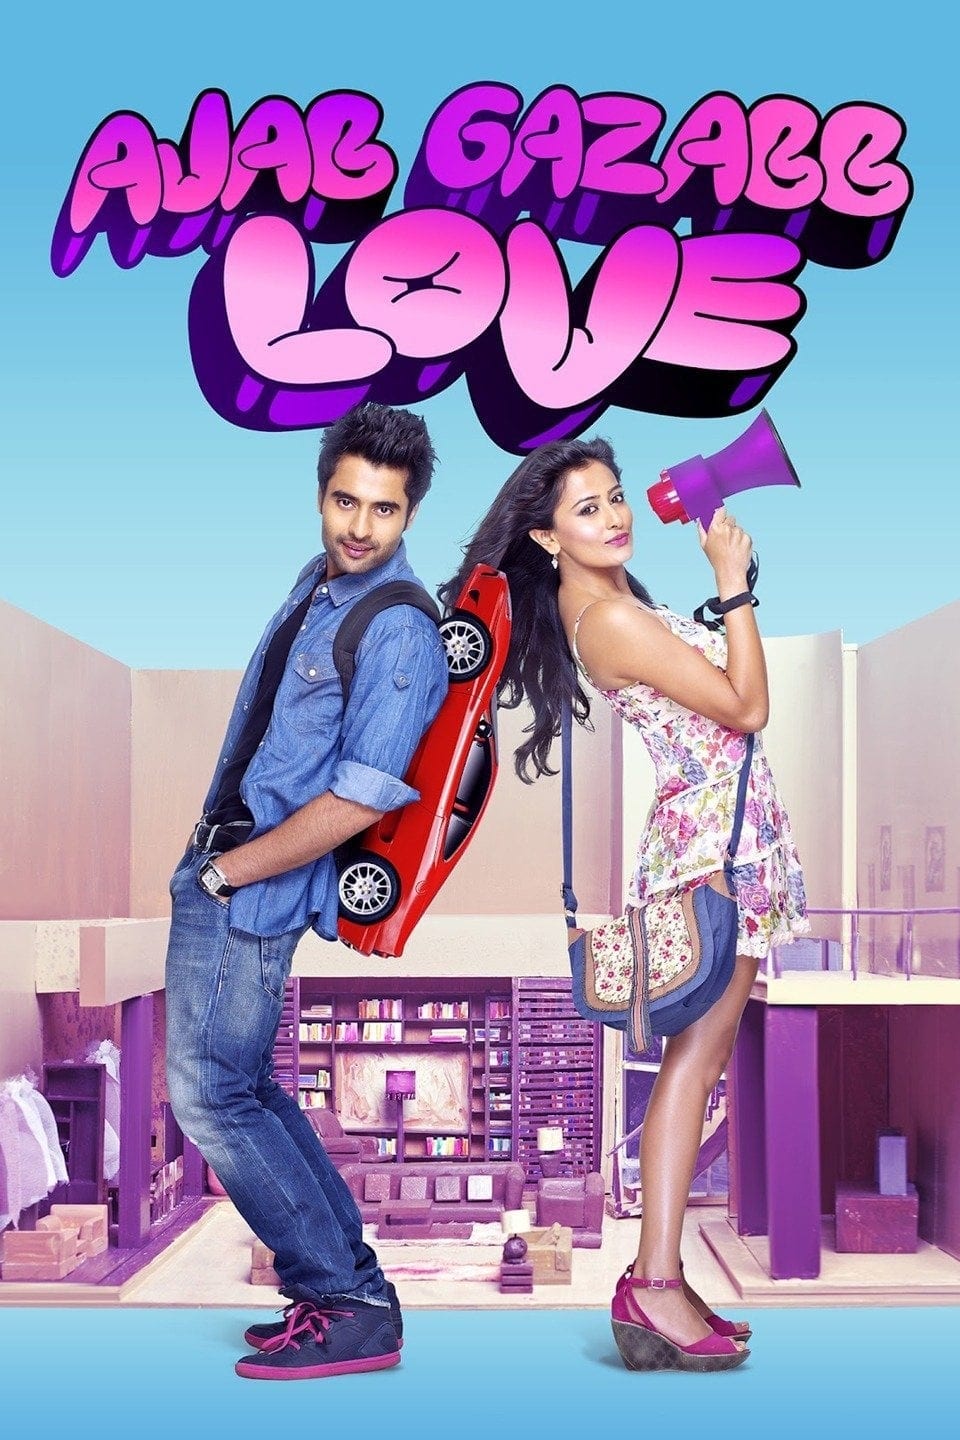 Poster for the movie "Ajab Gazabb Love"